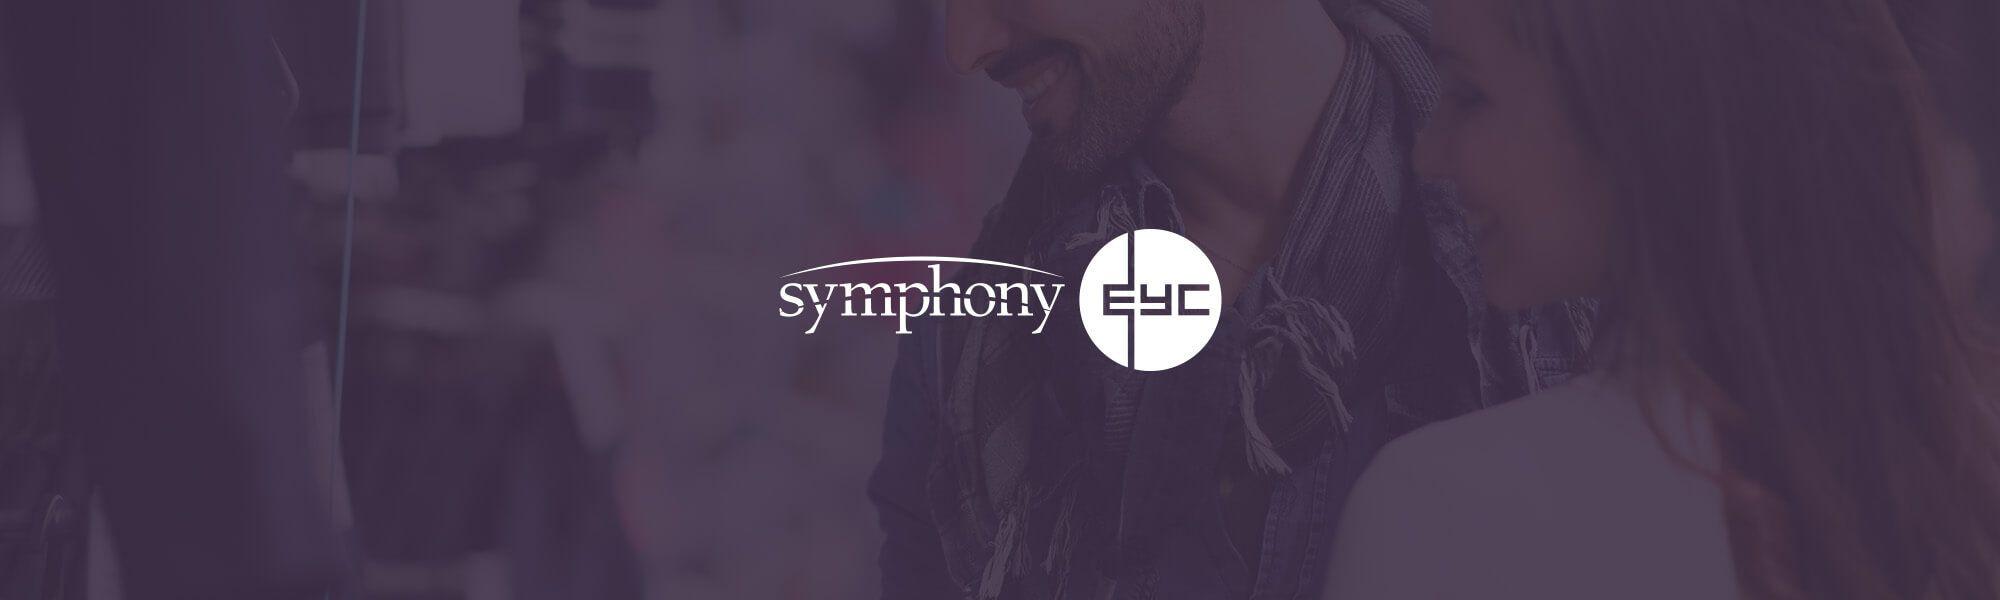 Symphony EYC Logo - Symphony EYC Showcase. Internet Dreams Studio